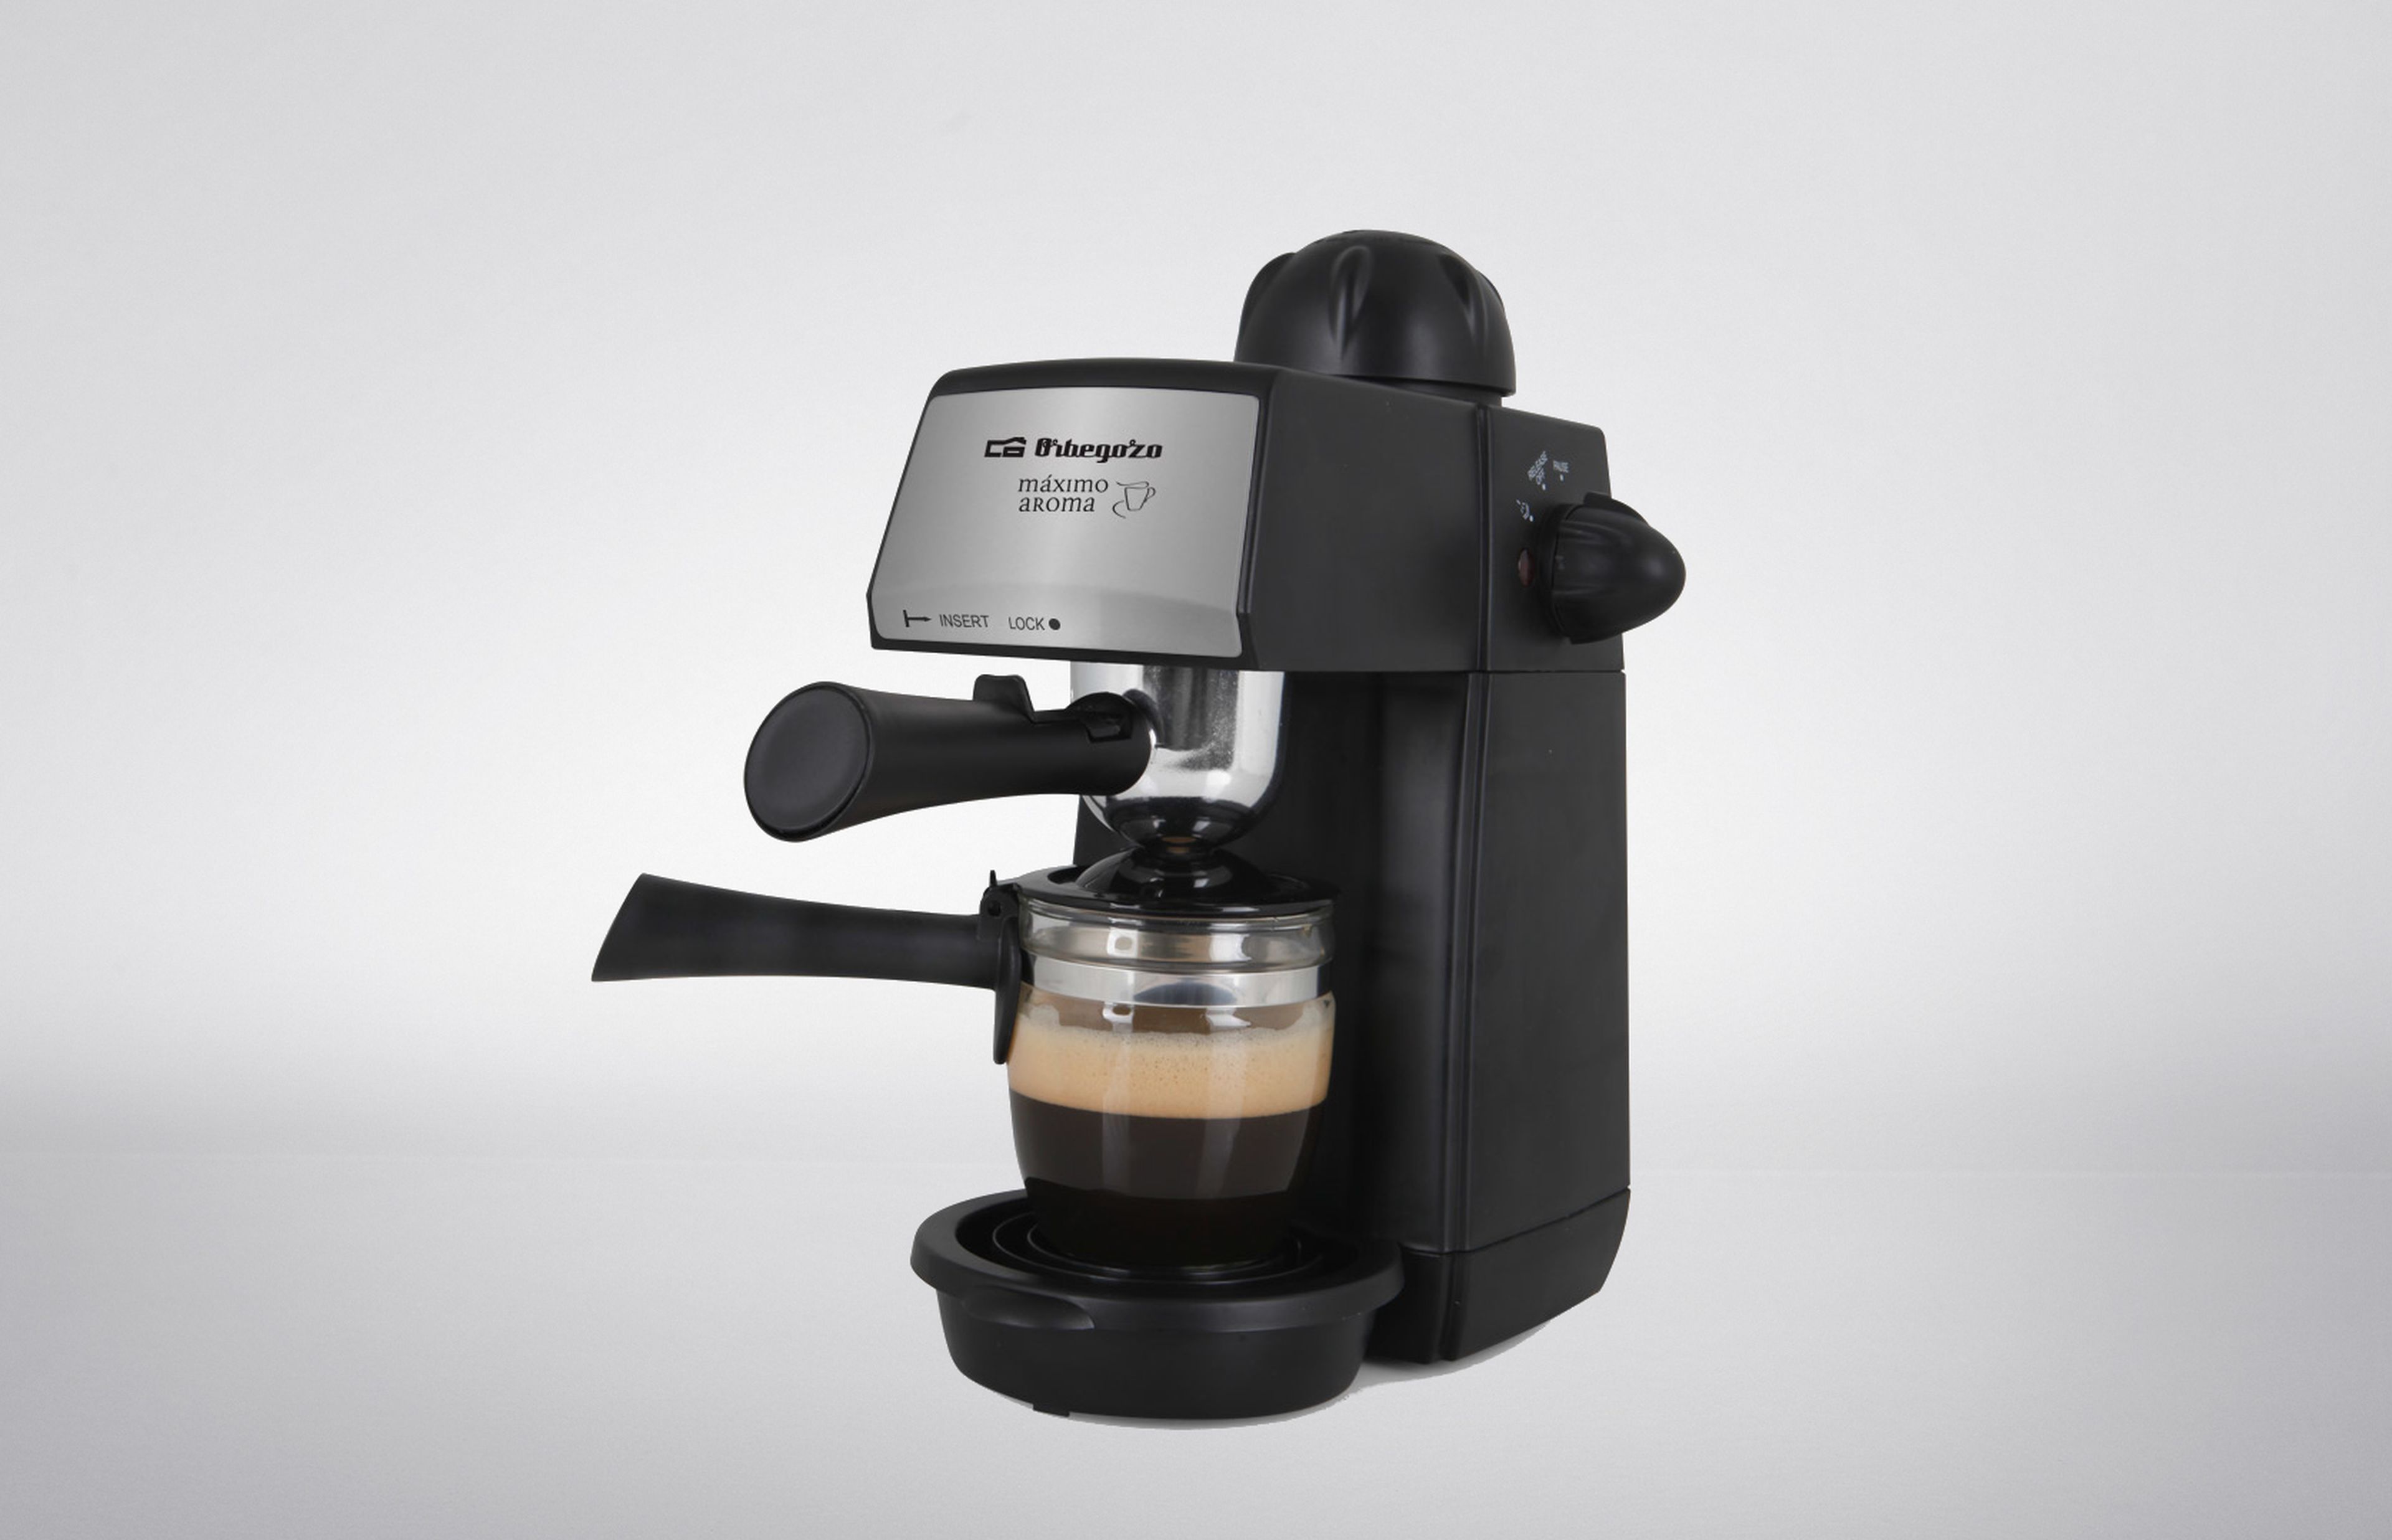 Si eres amante del café, esta cafetera a presión de apenas 30€ te